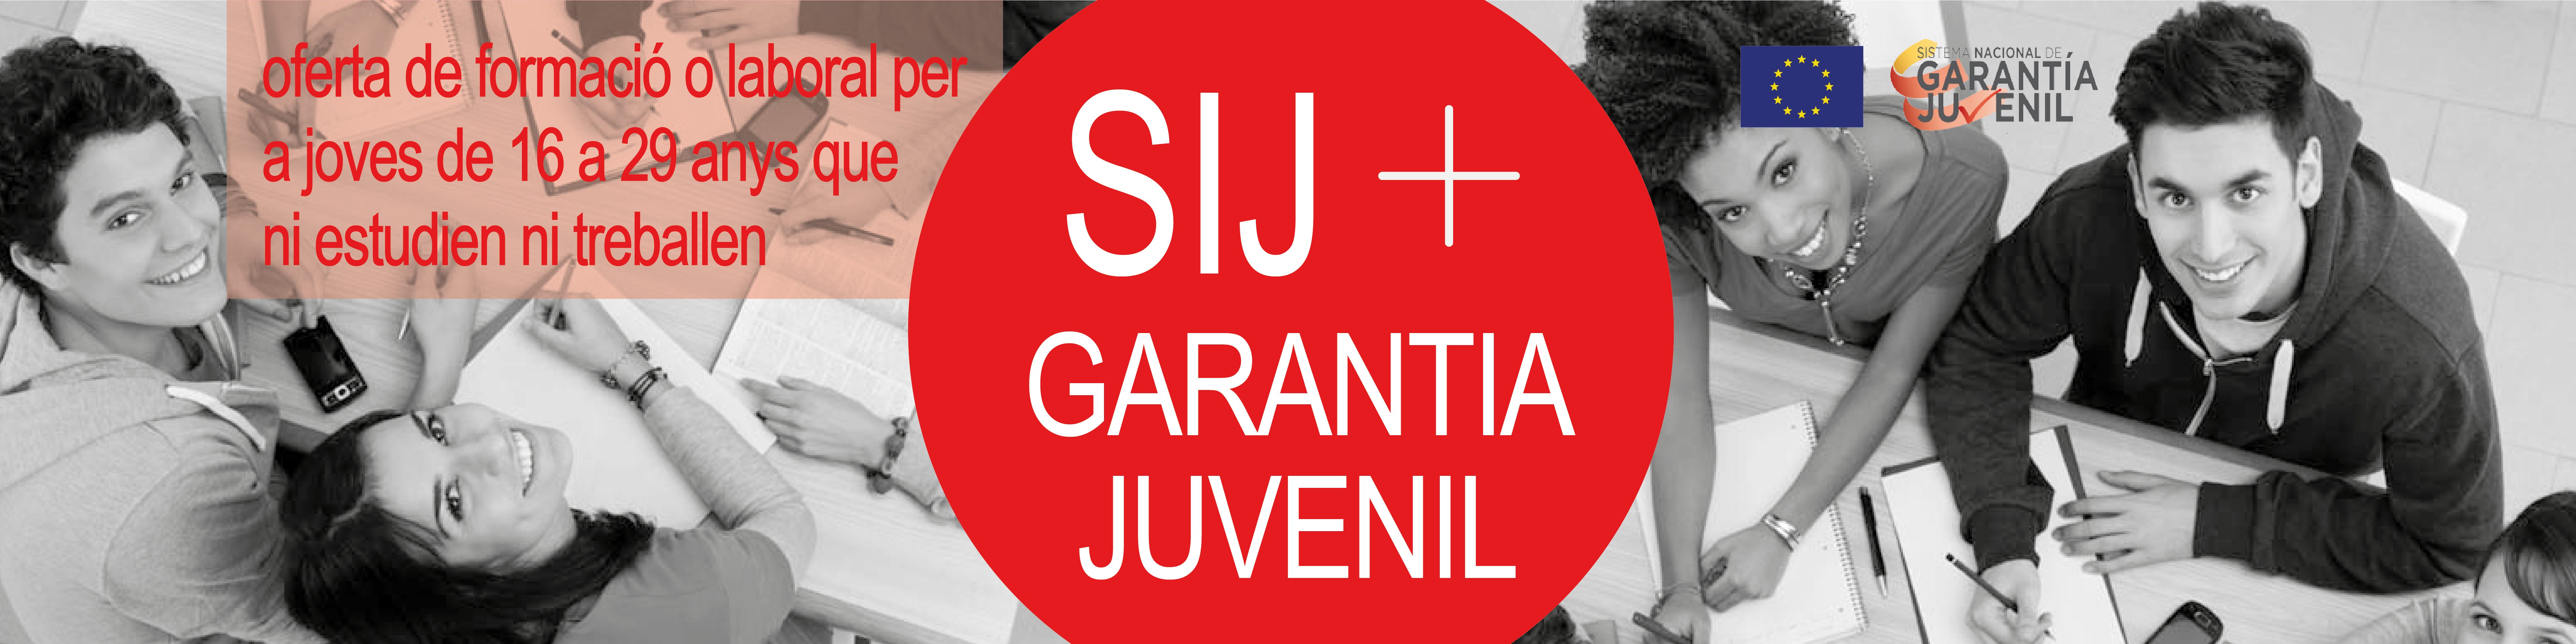 Banner Garantia Juvenil